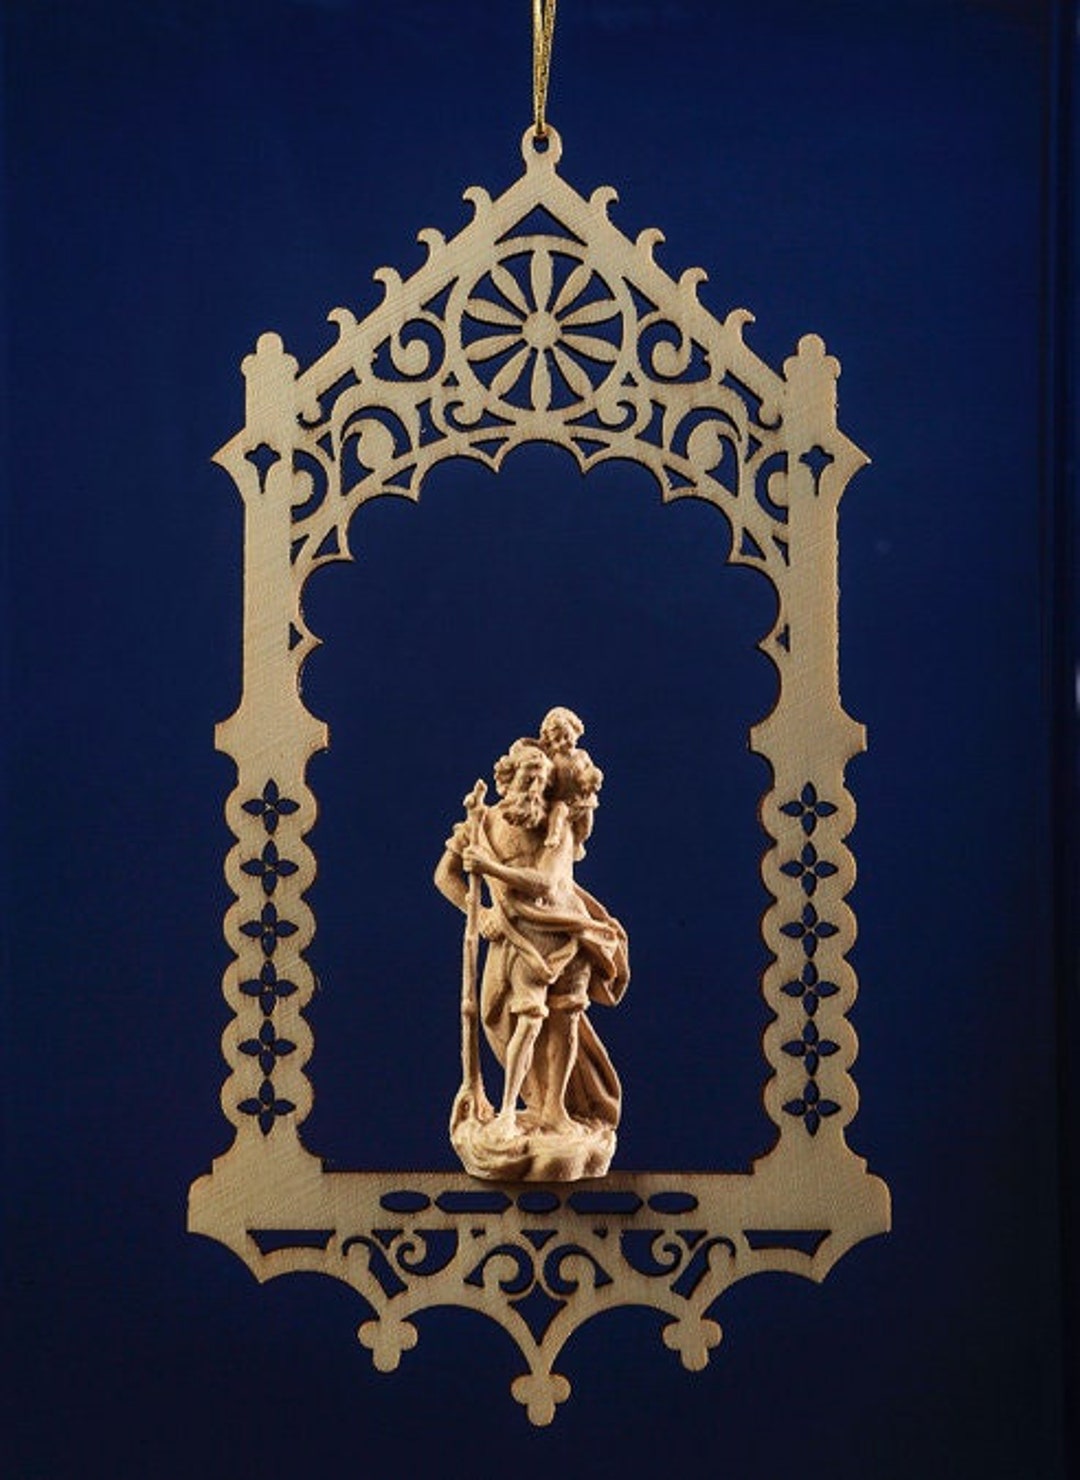 Statue des Heiligen Christophorus in der Nische, geschnitzt in